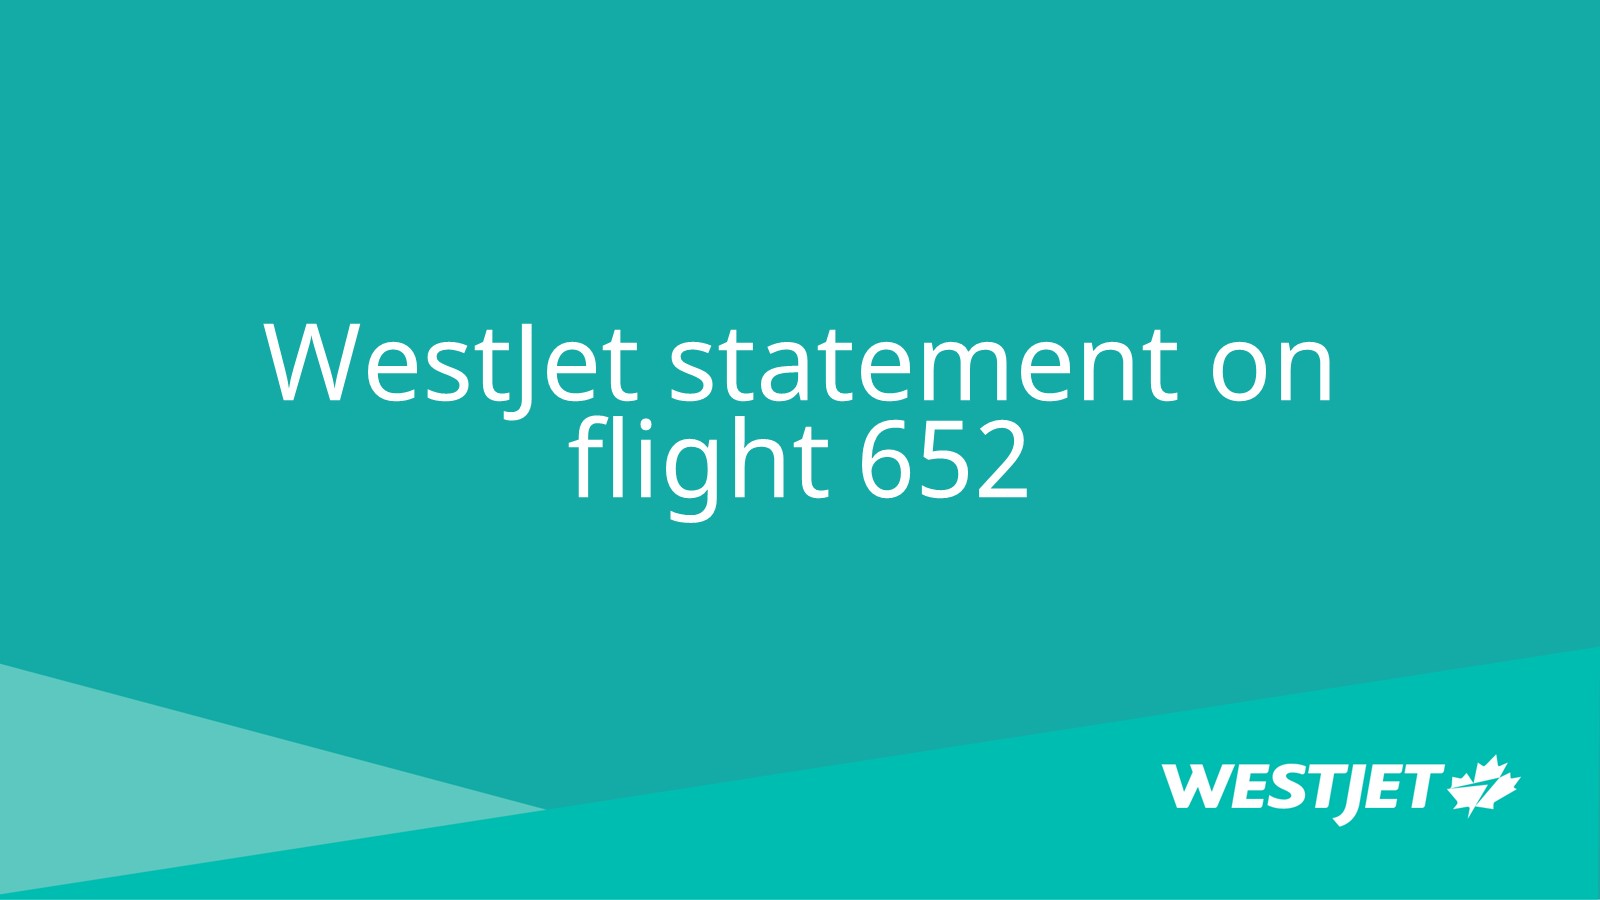 WestJet statement on flight 652